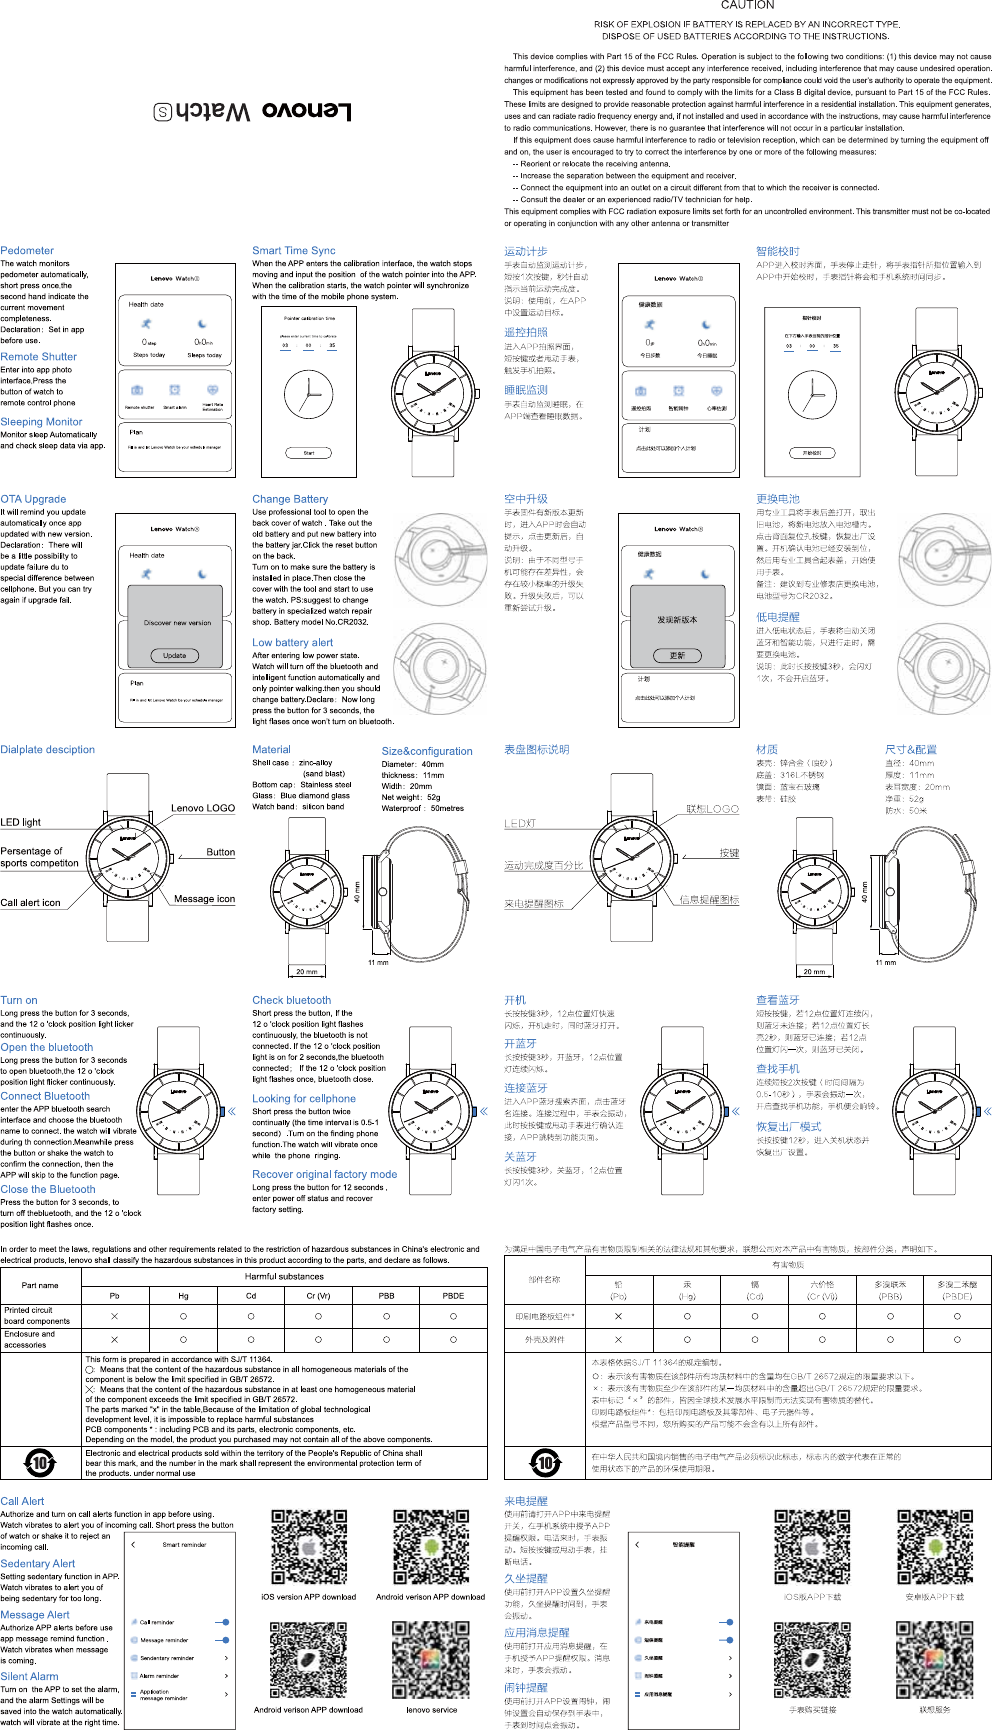 KR80 Smart Wear User Manual - High-Performance Wrist-Band Smart Watch